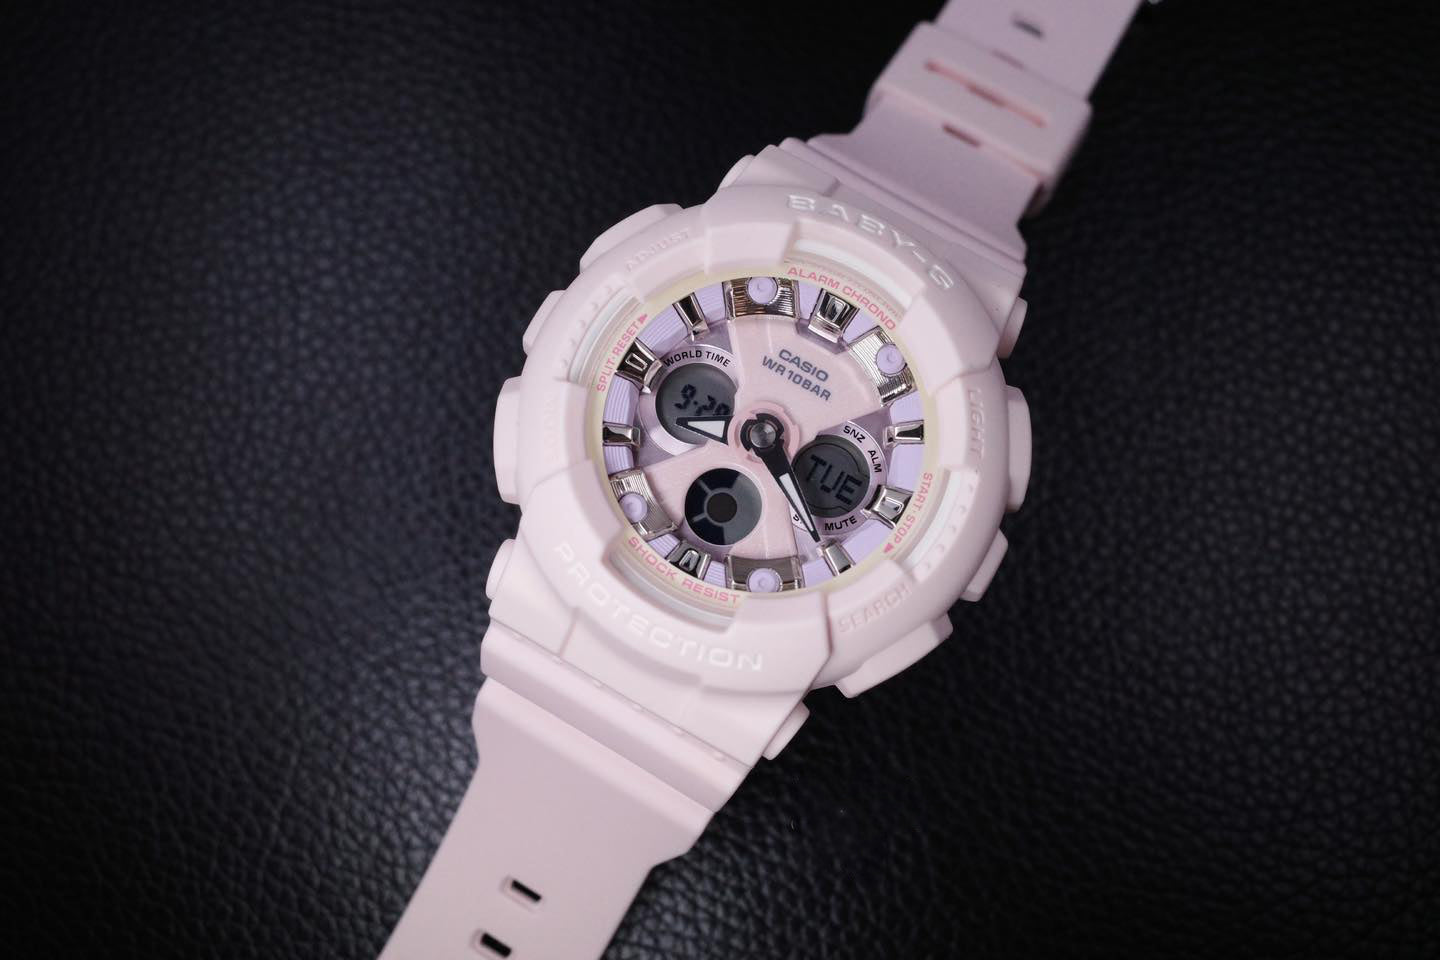 Casio Baby-G Anadigi Icey Pastel Peach Watch BA130WP-4ADR - Prestige